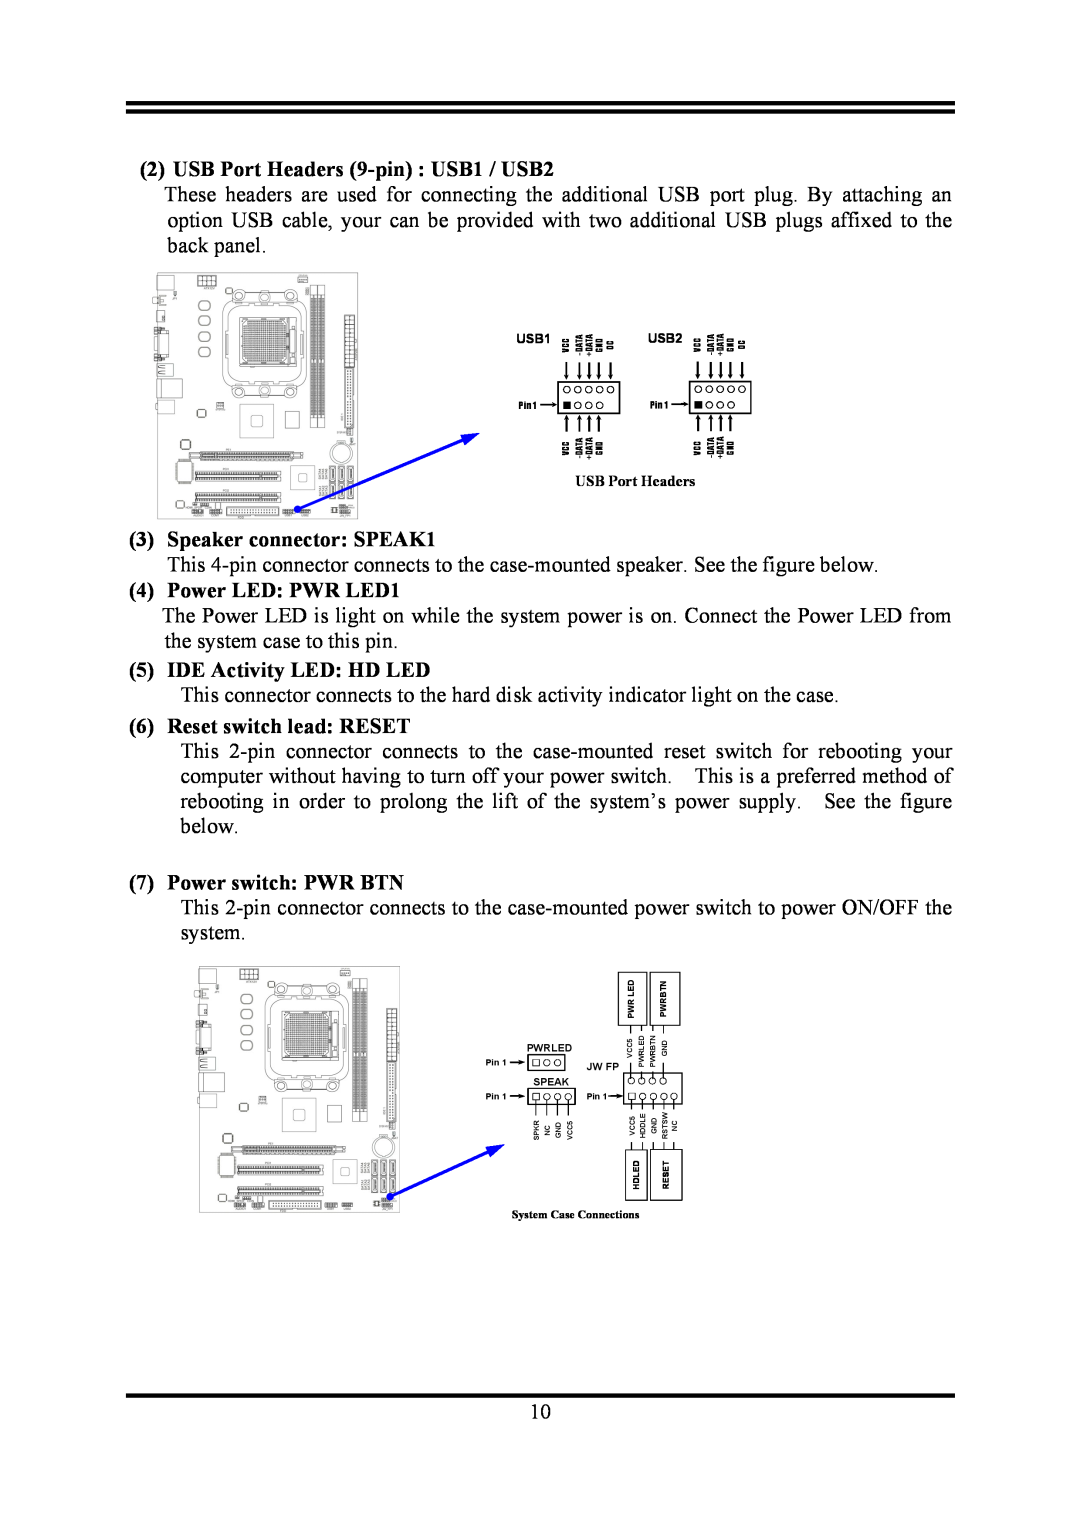 AMD KM780V USB Port Headers 9-pin USB1 / USB2, Speaker connector SPEAK1, Power LED PWR LED1, IDE Activity LED HD LED 